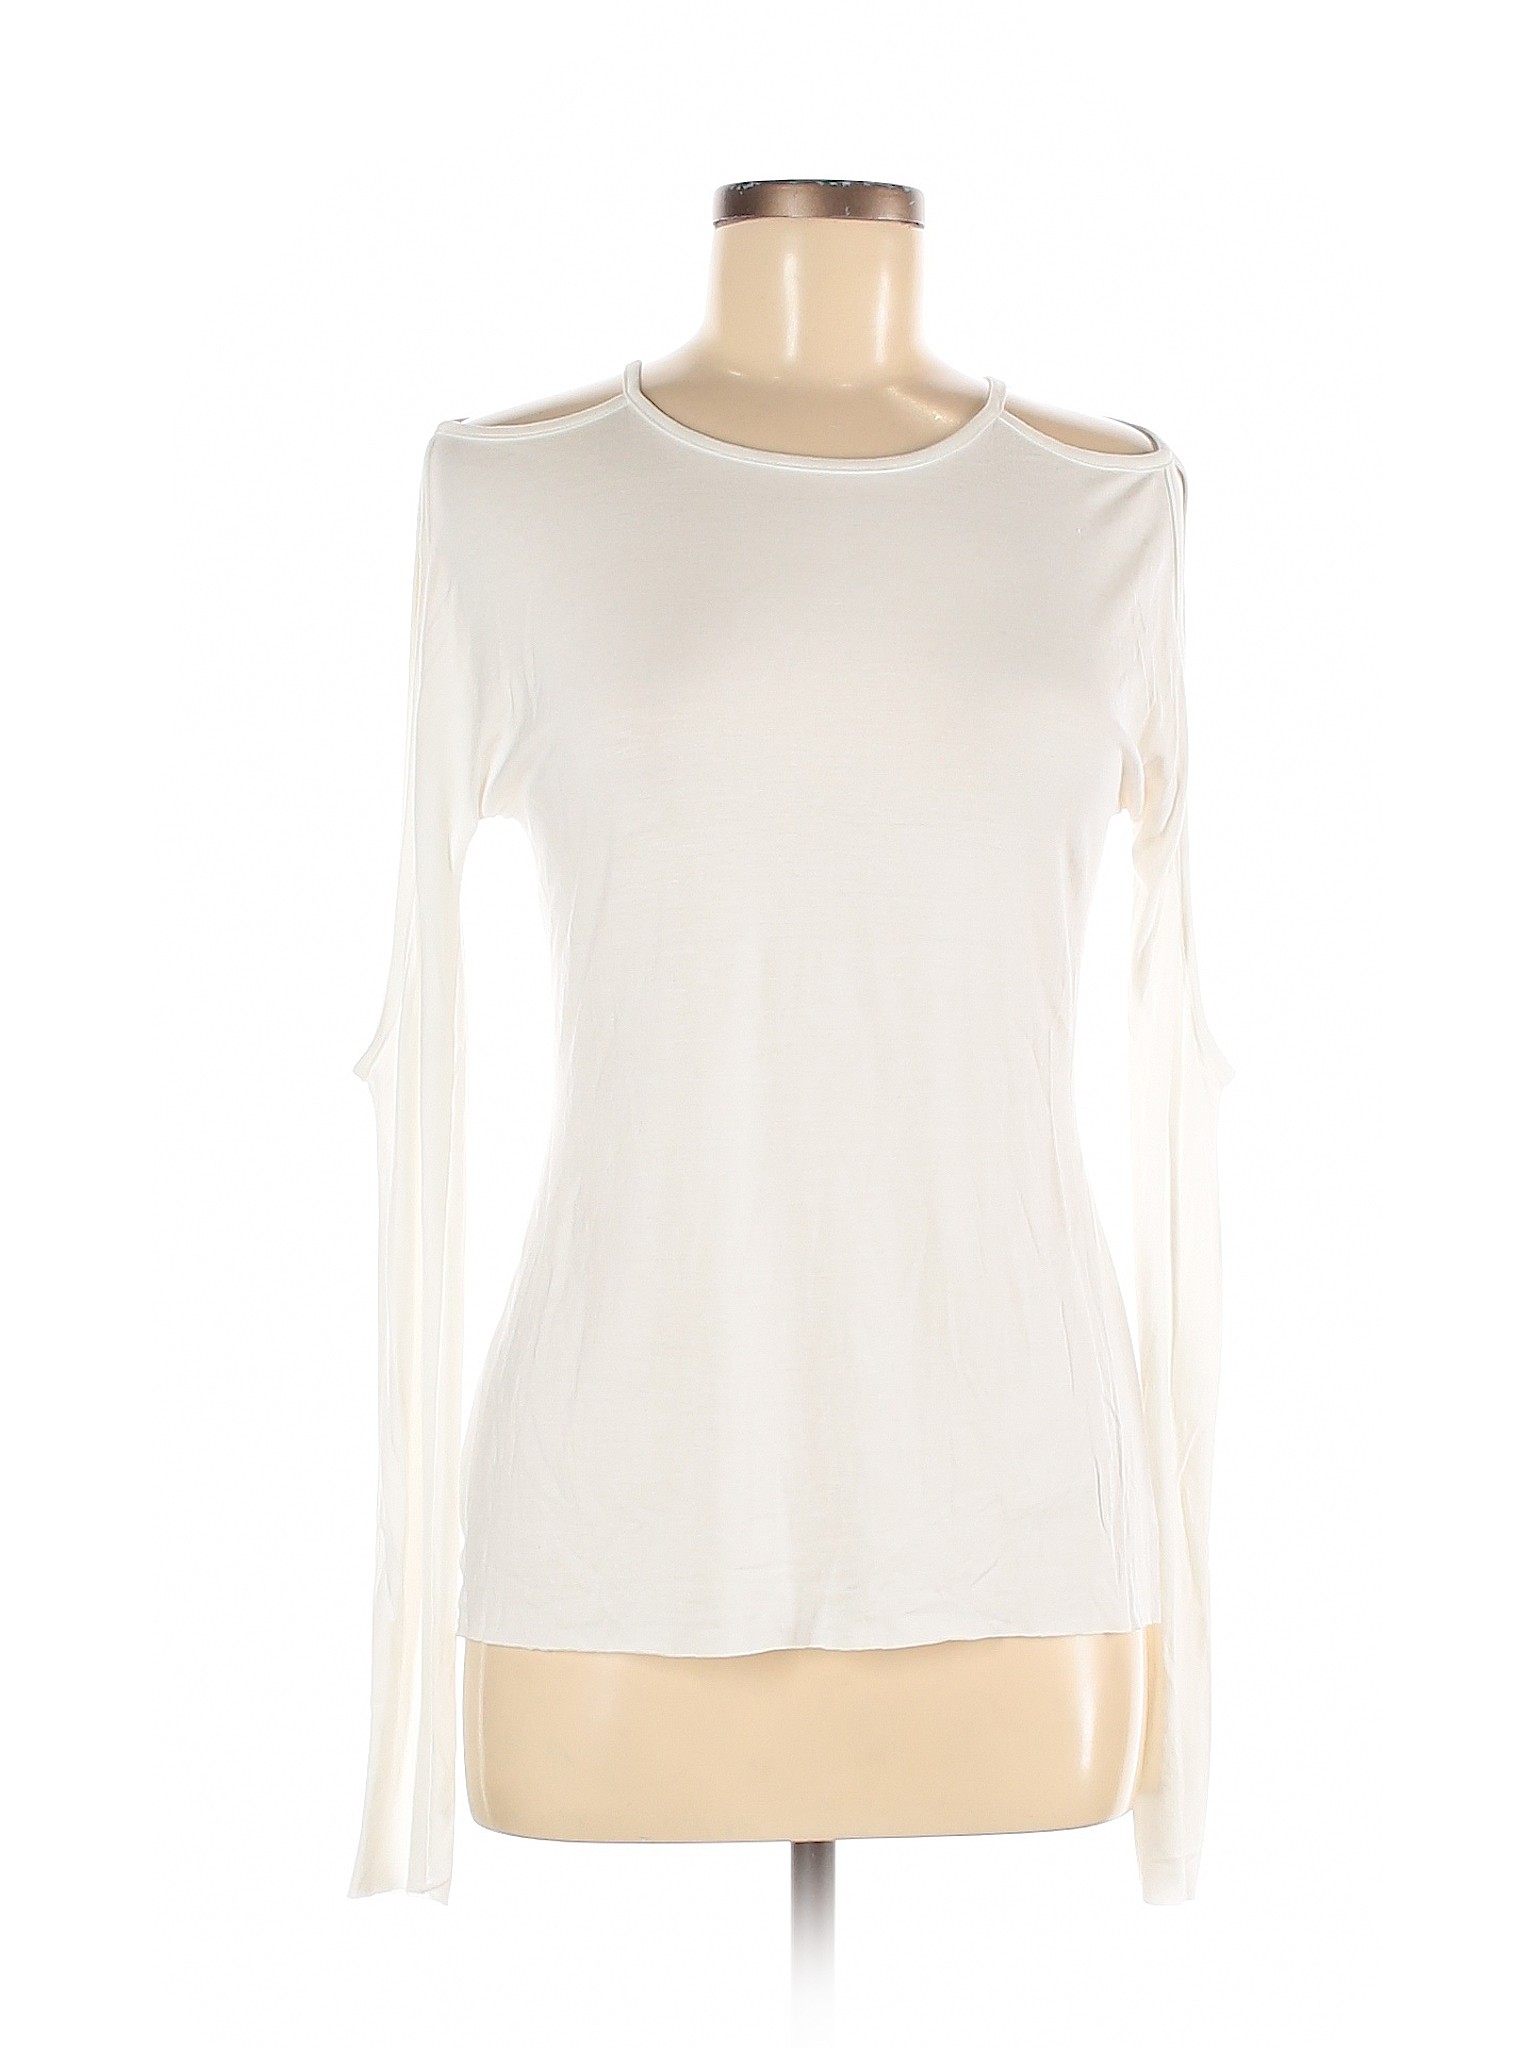 Bailey 44 Women White Long Sleeve Top M | eBay